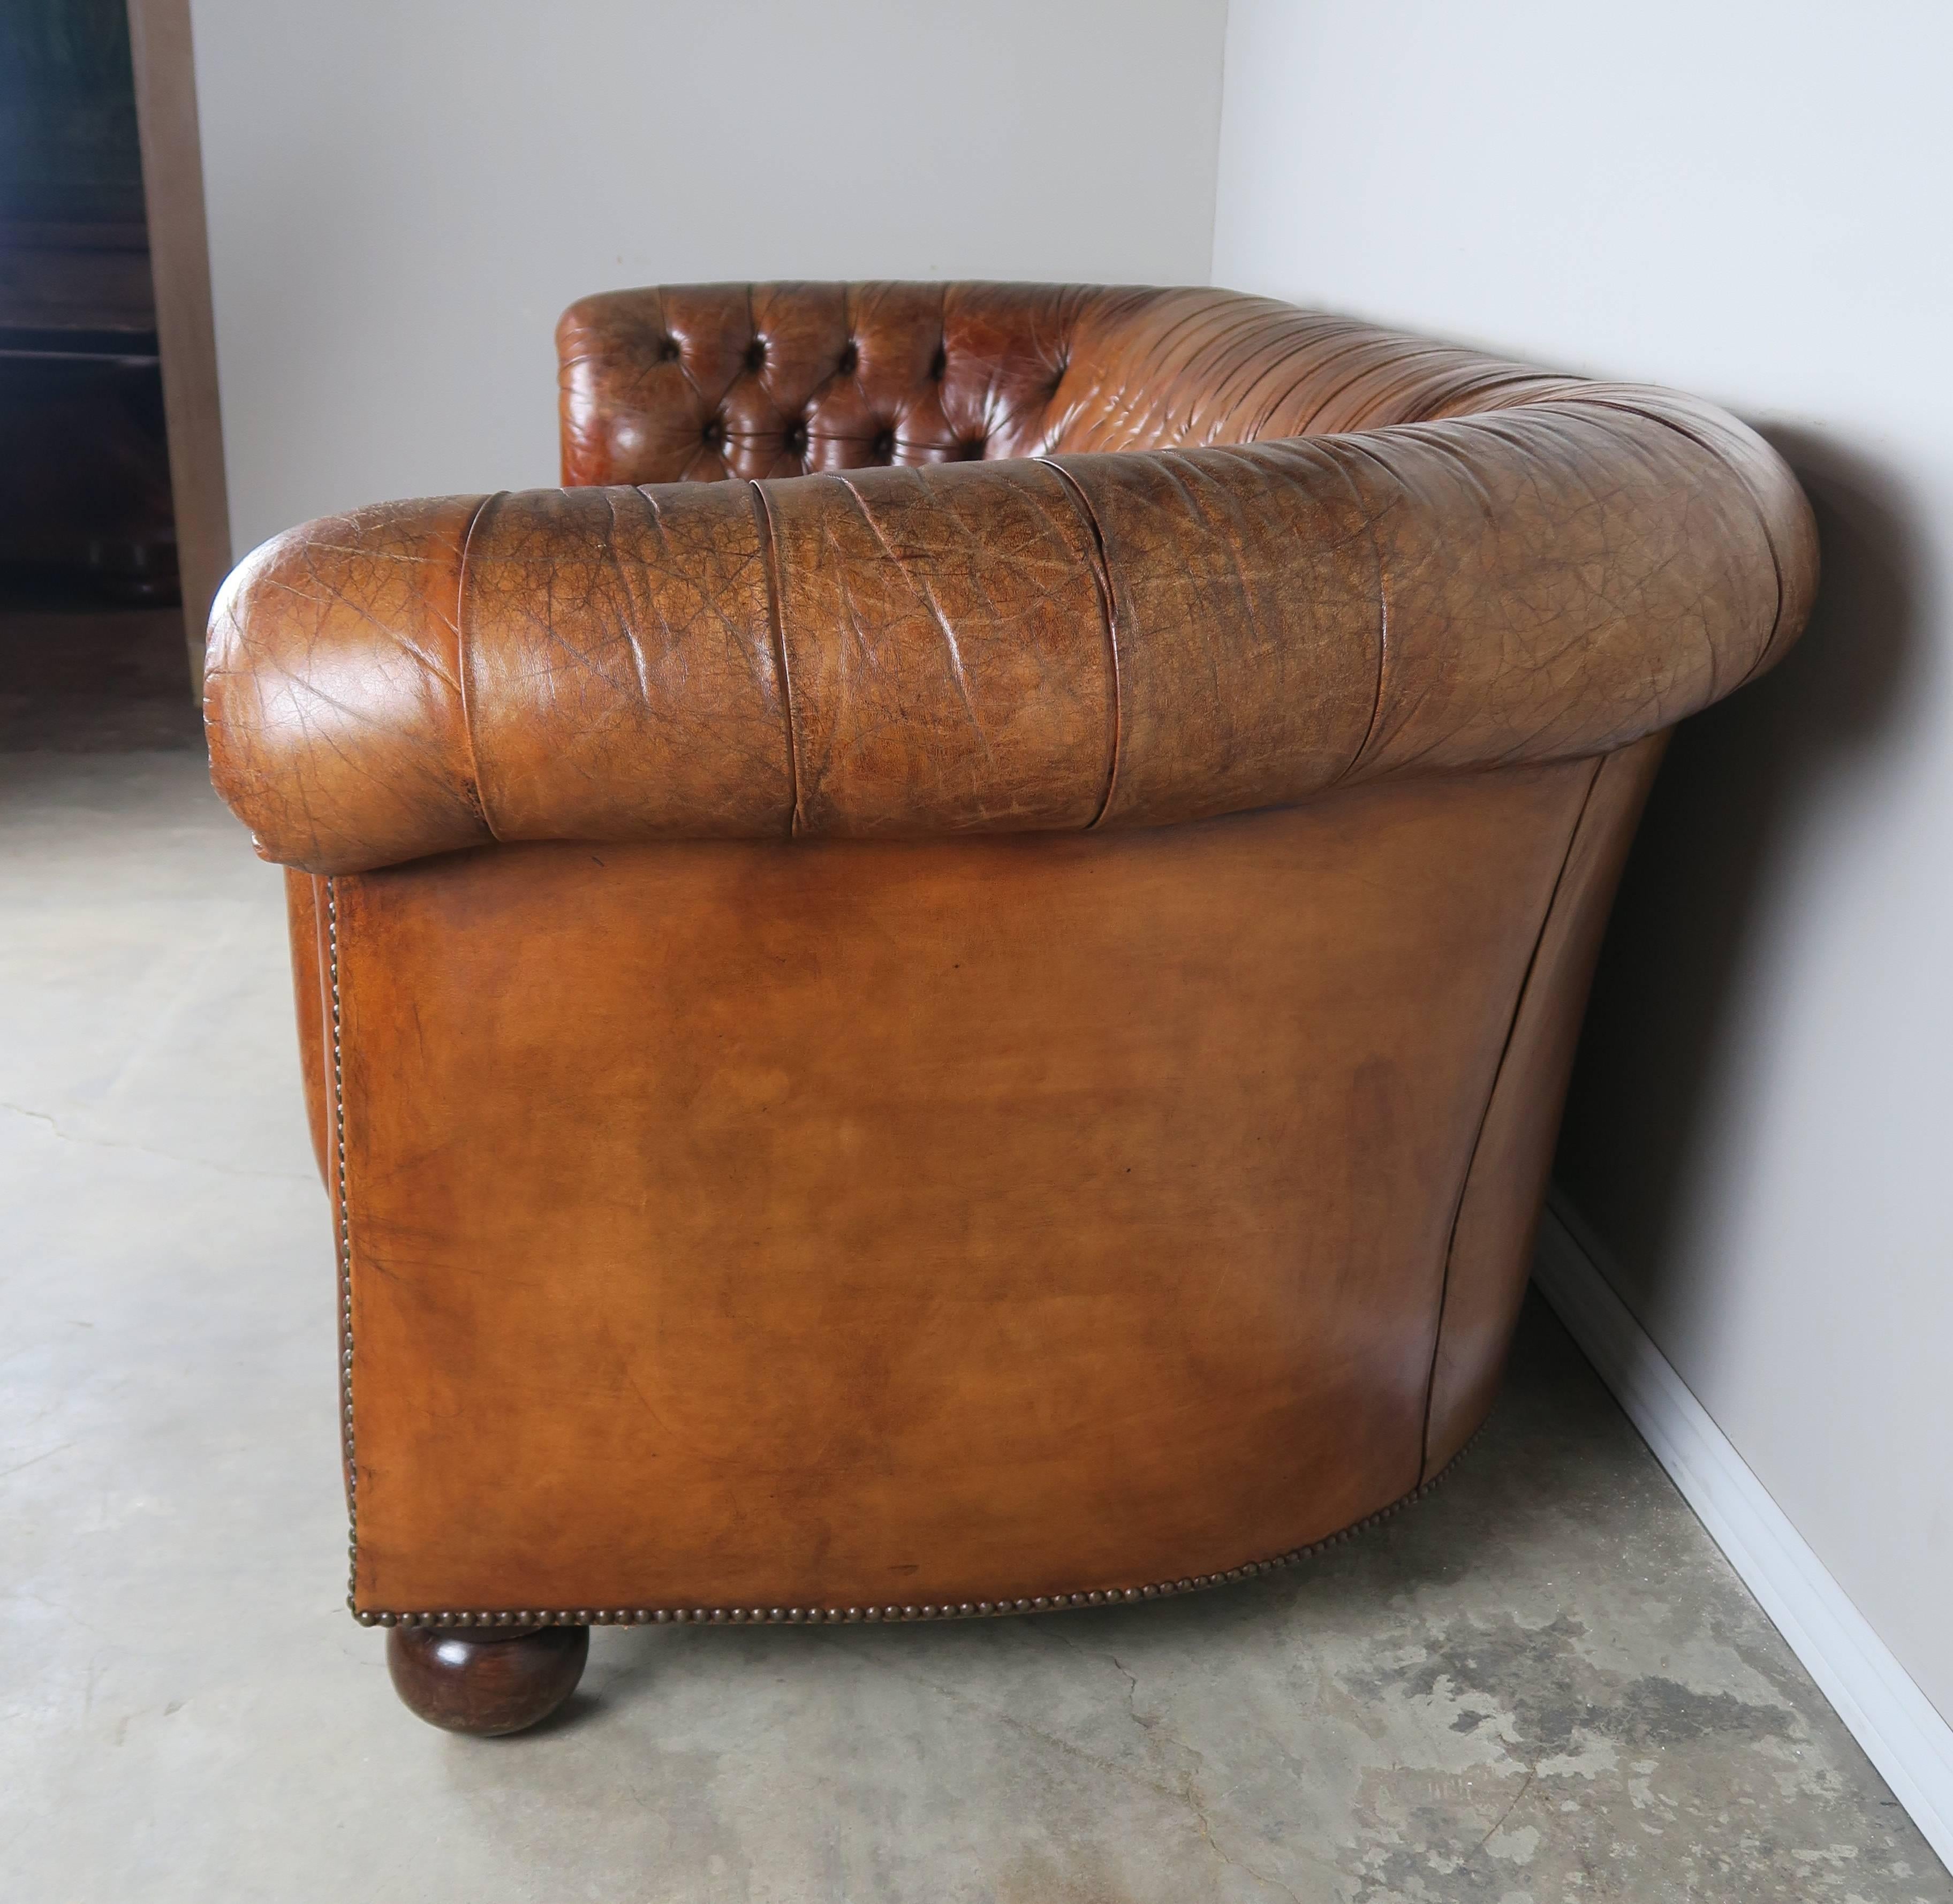 Mid-20th Century English Leather Chesterfield Sofa, circa 1940s